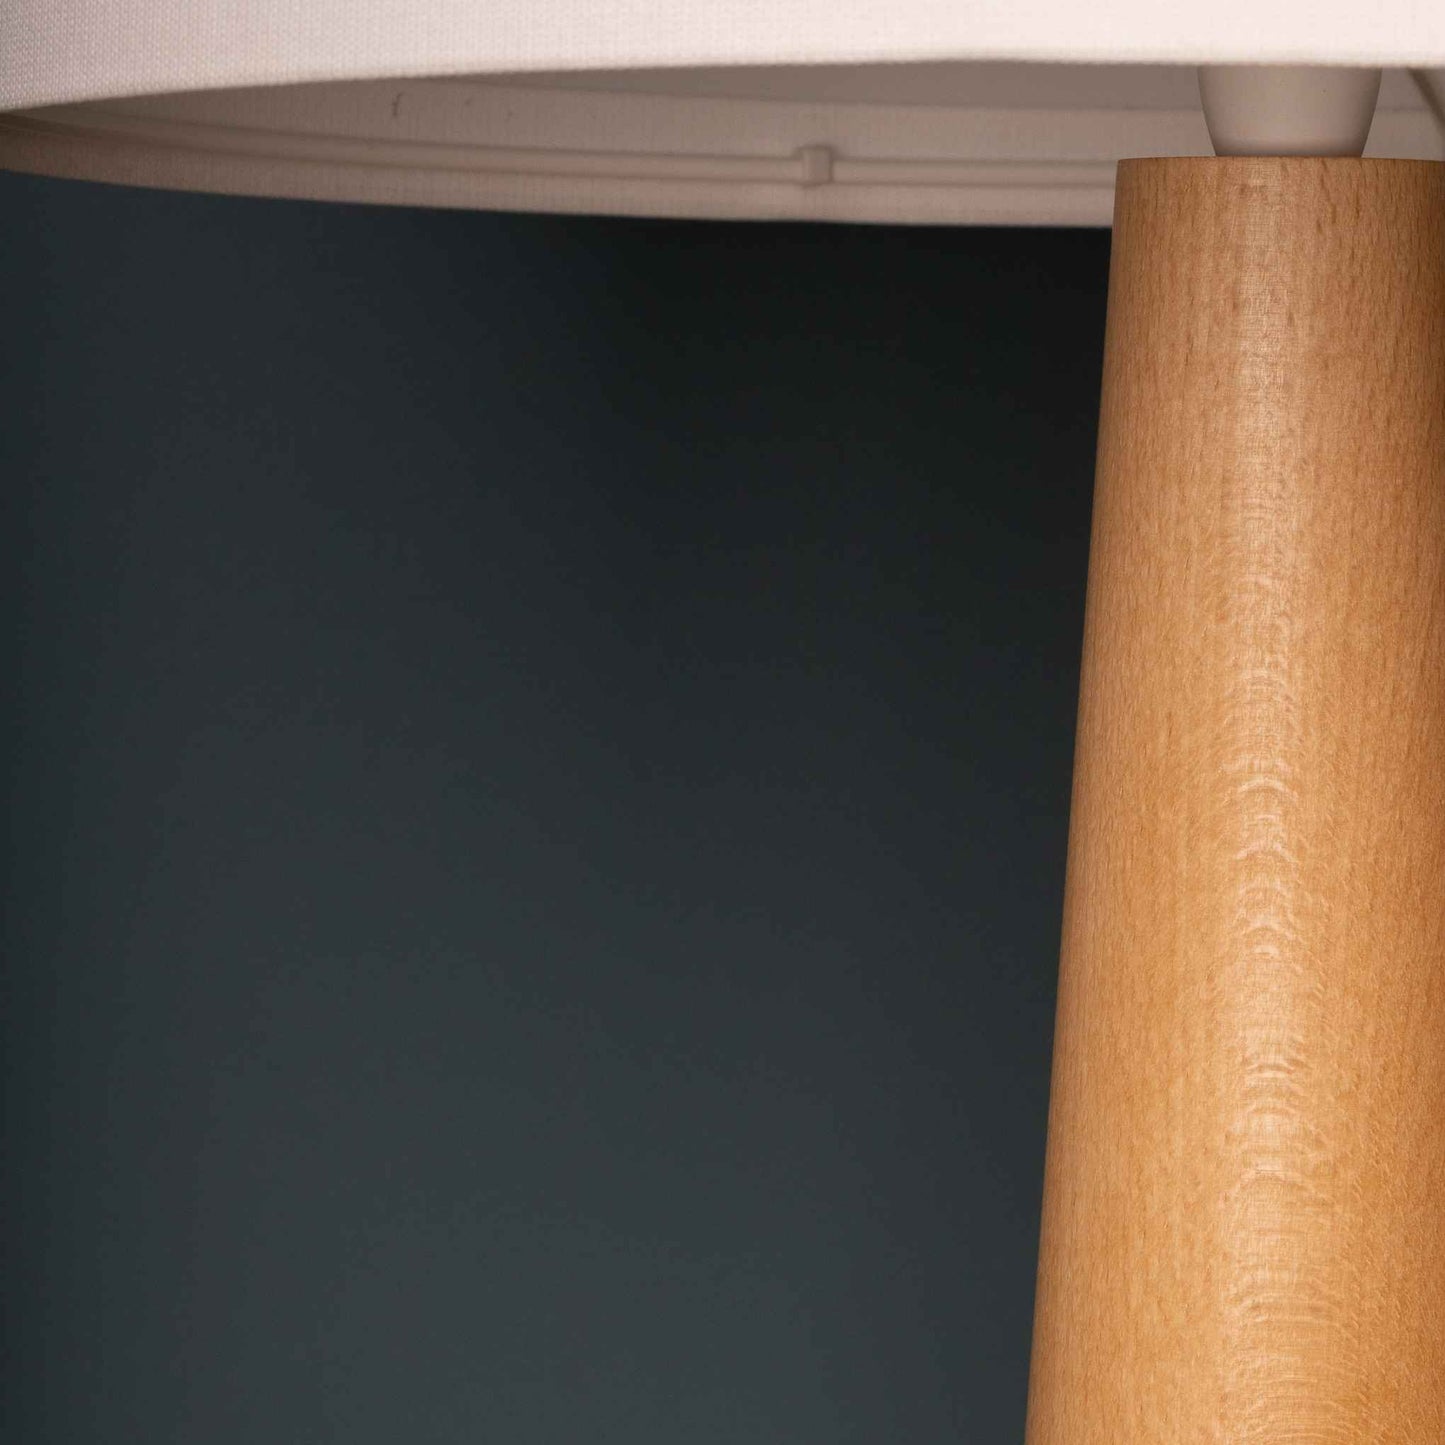 Vector Wood Table Lamp